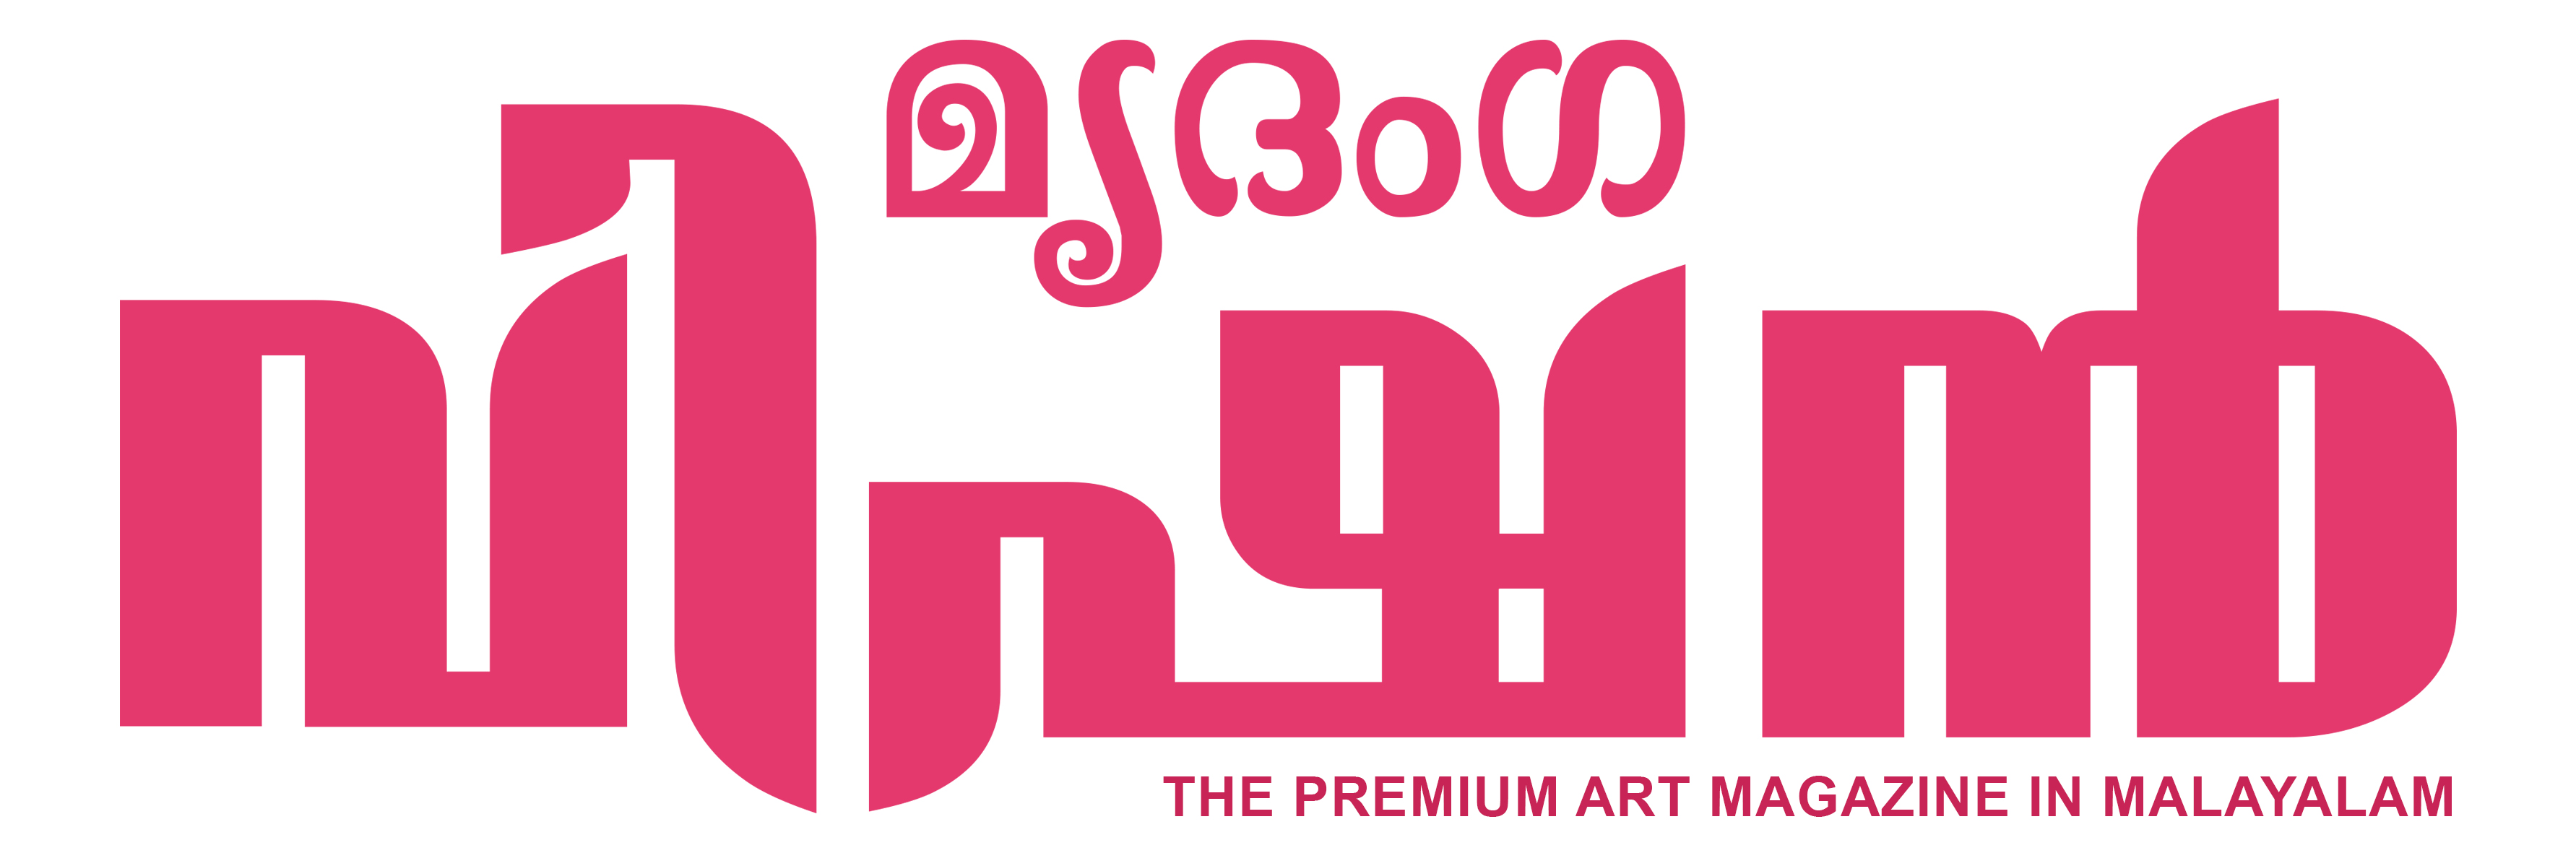 The premium art magazine in Malayalam published by Mridanga vision